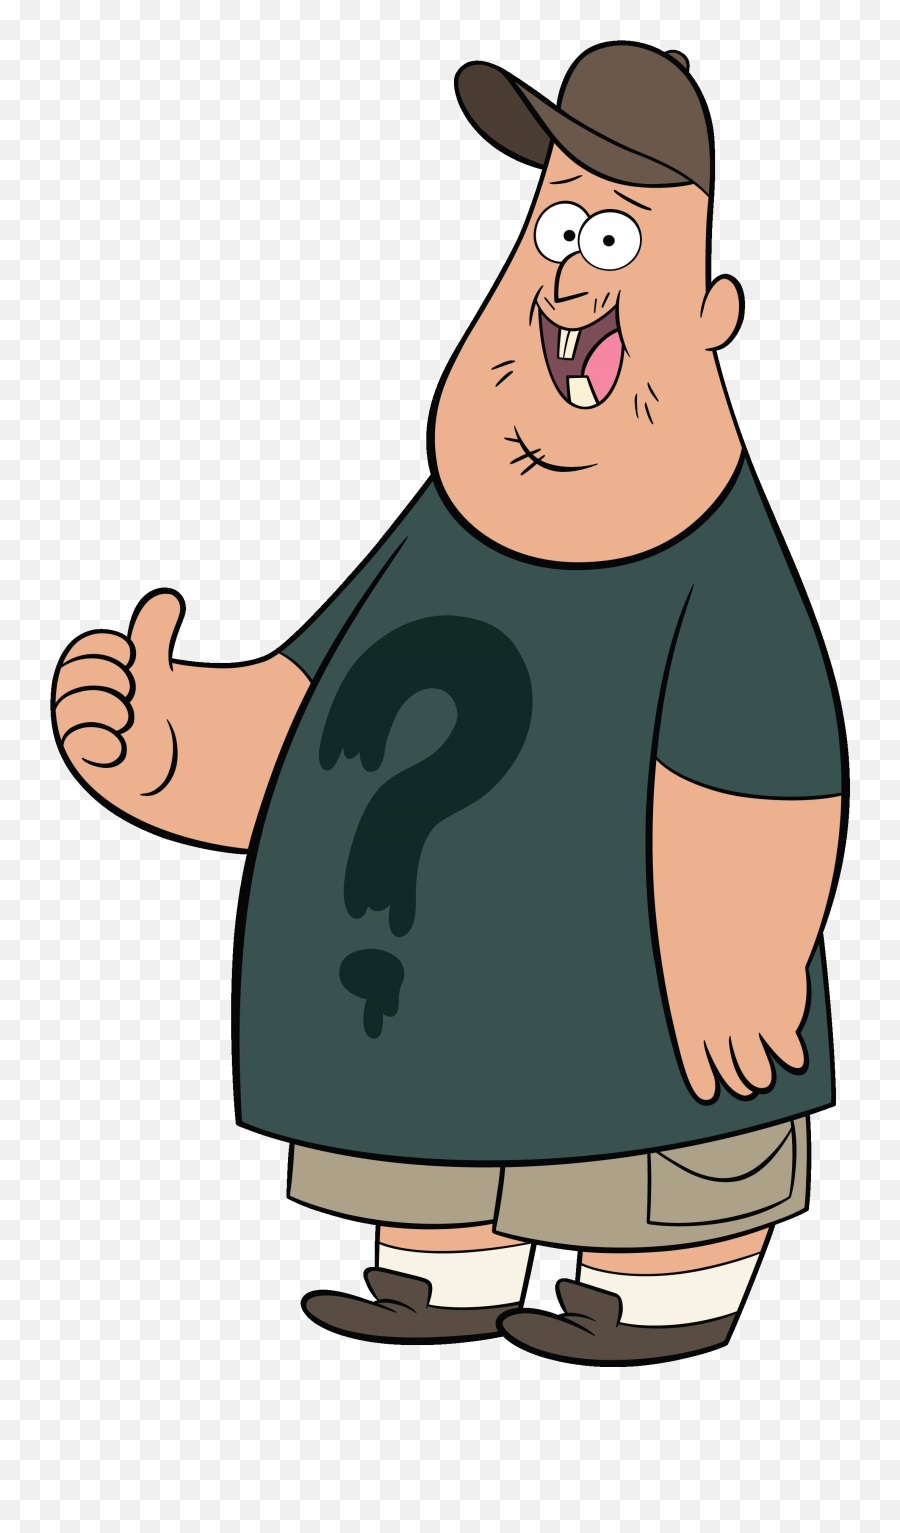 Gravity Falls Character Soos Ramirez Soos Gravity Falls Personajes